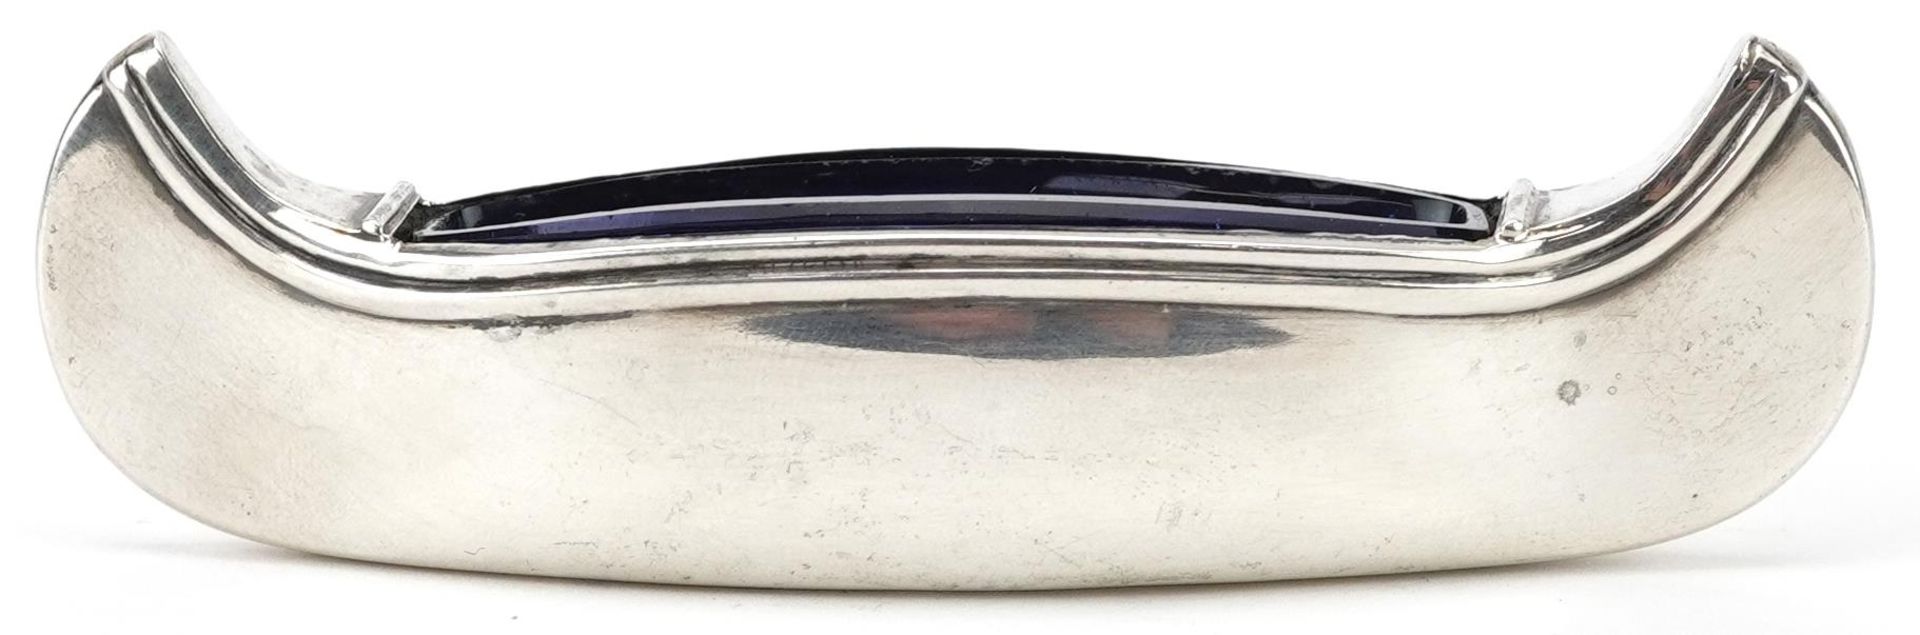 Adie & Lovekin Ltd, Edwardian silver open table salt in the form of a boat, with blue glass liner, - Bild 2 aus 5